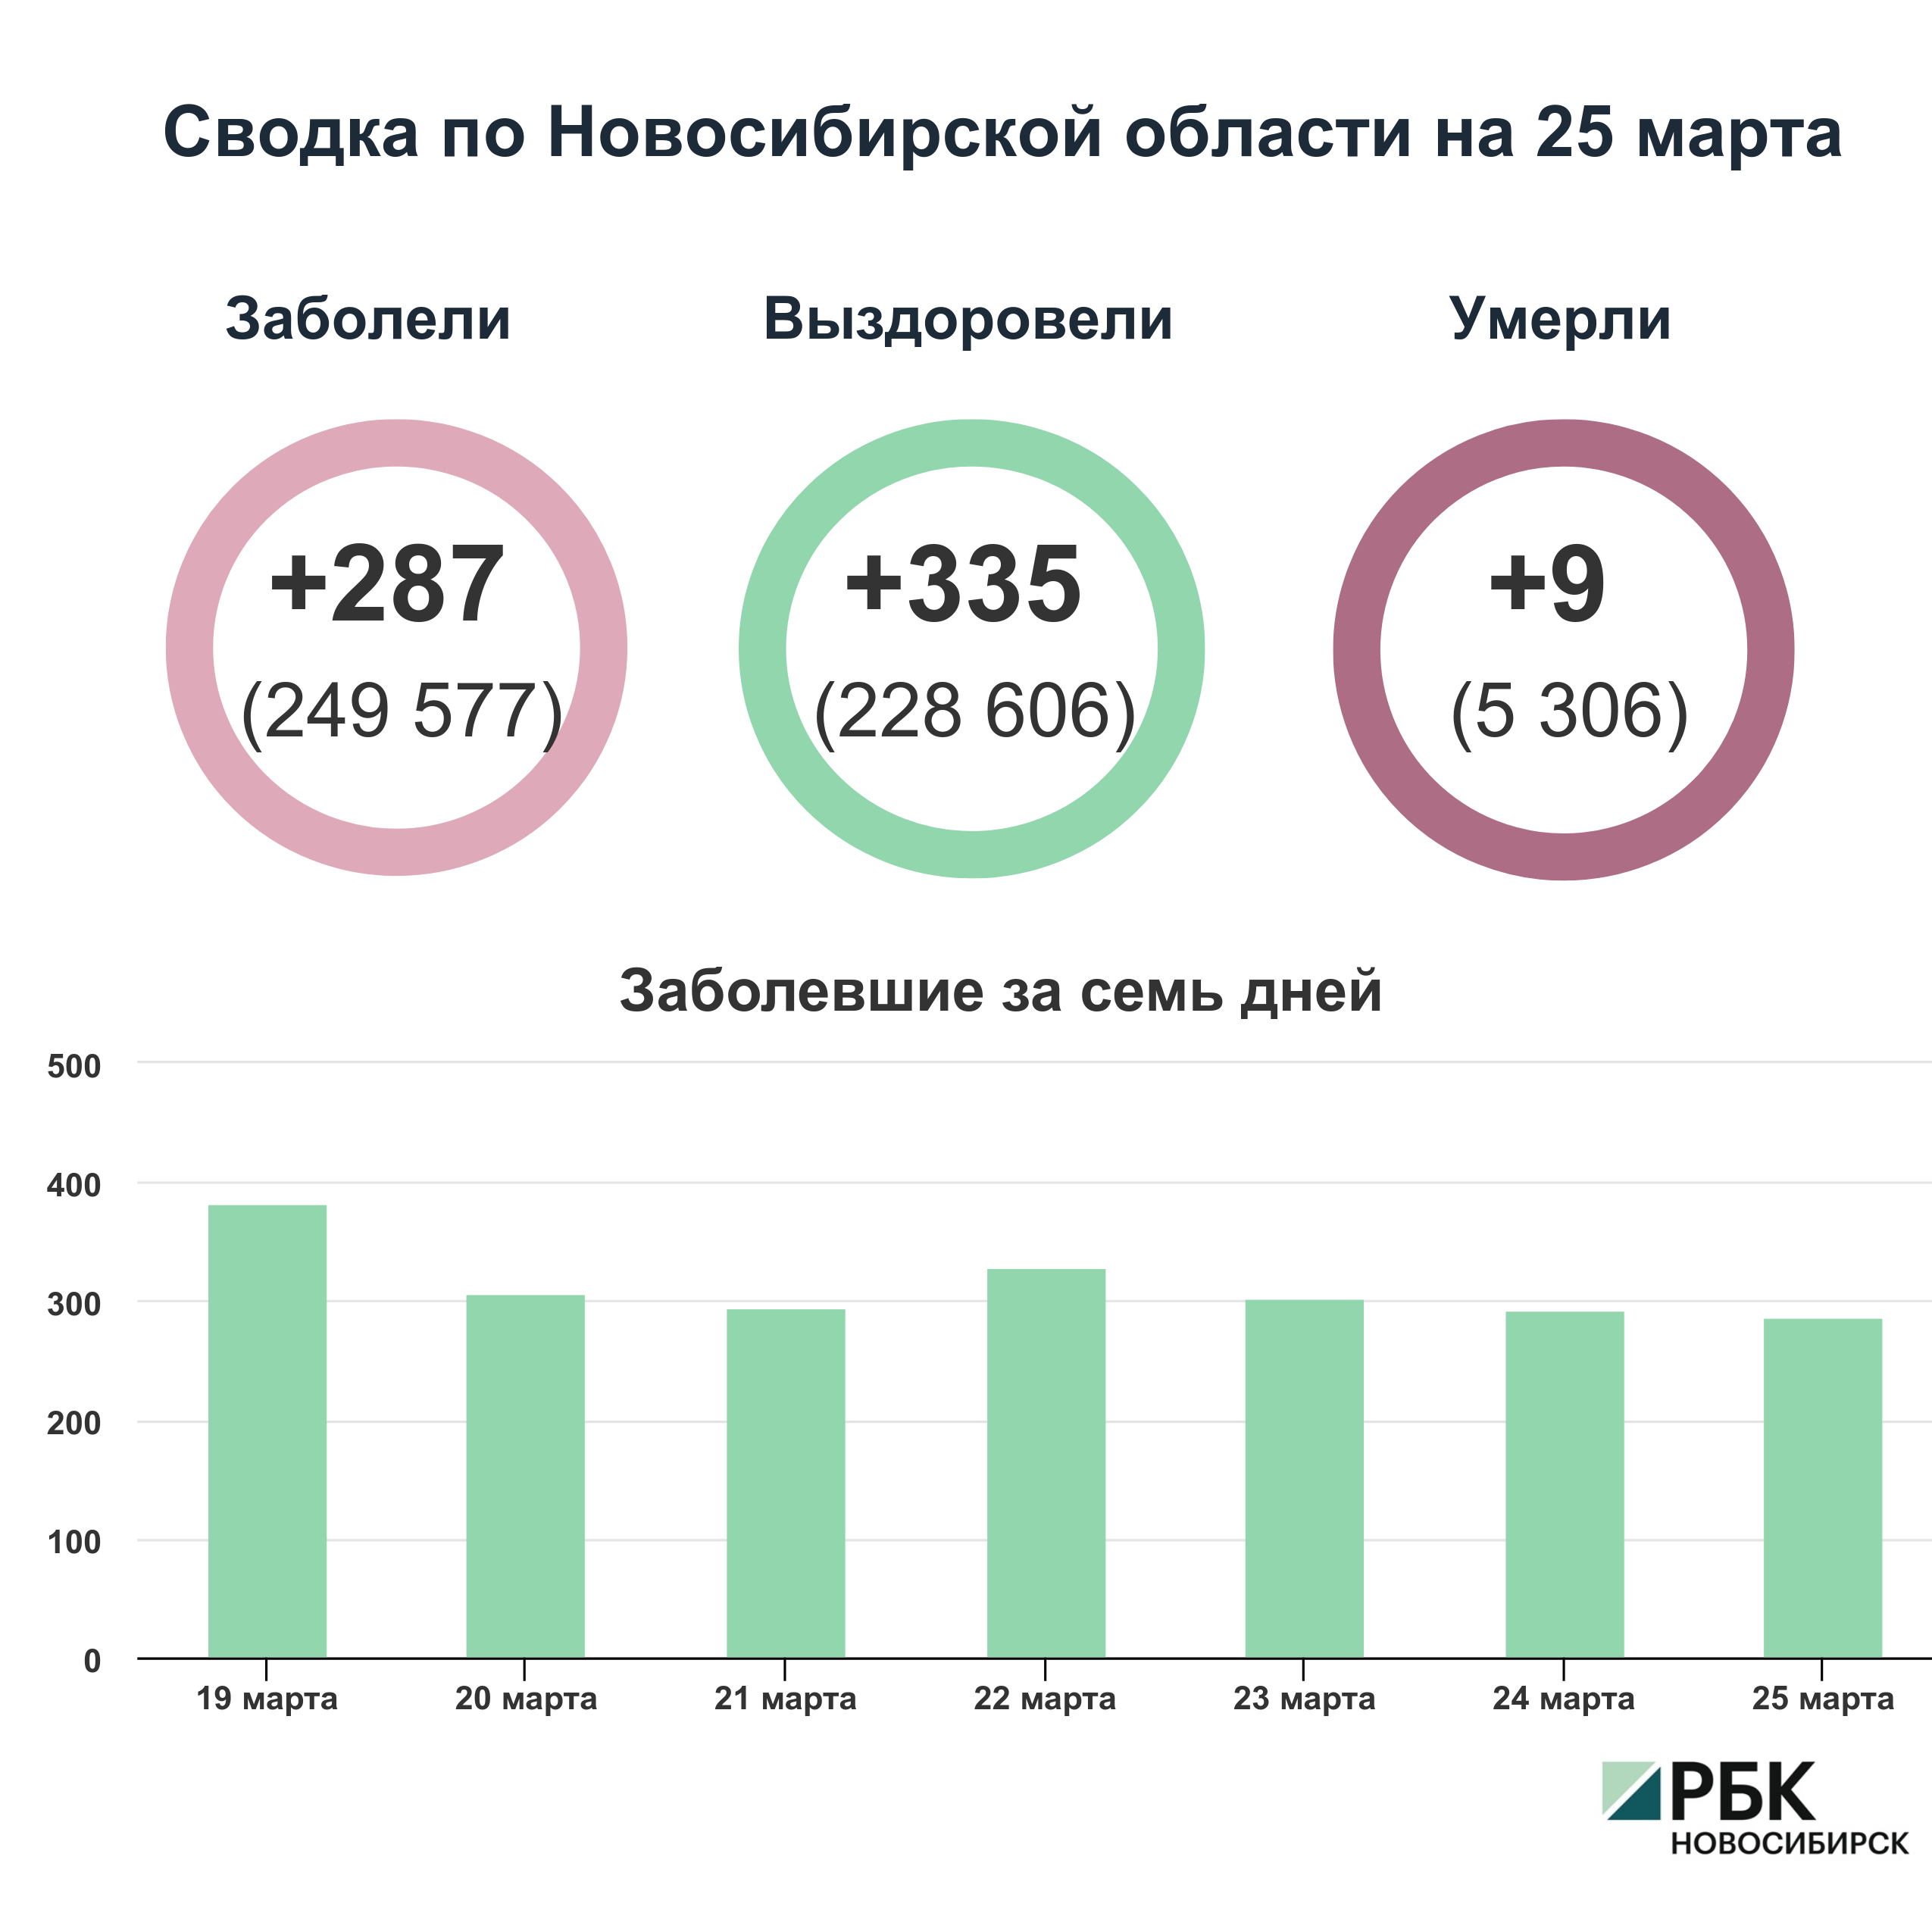 Коронавирус в Новосибирске: сводка на 25 марта